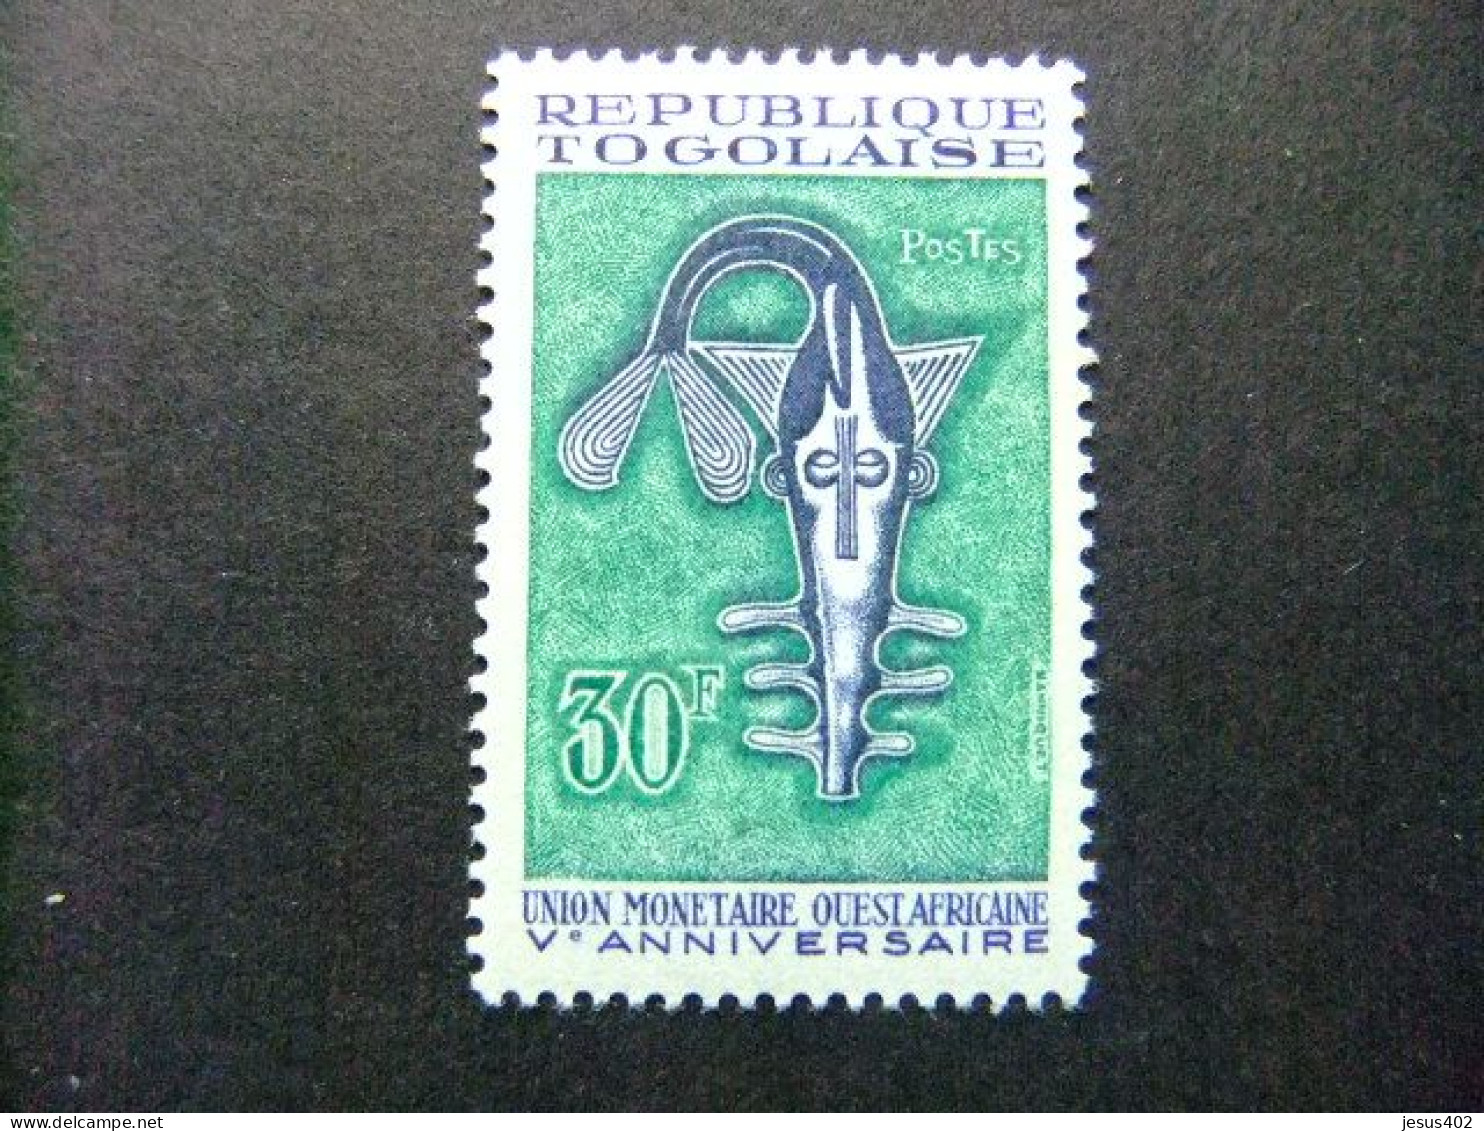 55 TOGO REPUBLIQUE TOGOLAISE 1967 / UNION MONETARIA / YVERT 555 ** MNH - Togo (1960-...)